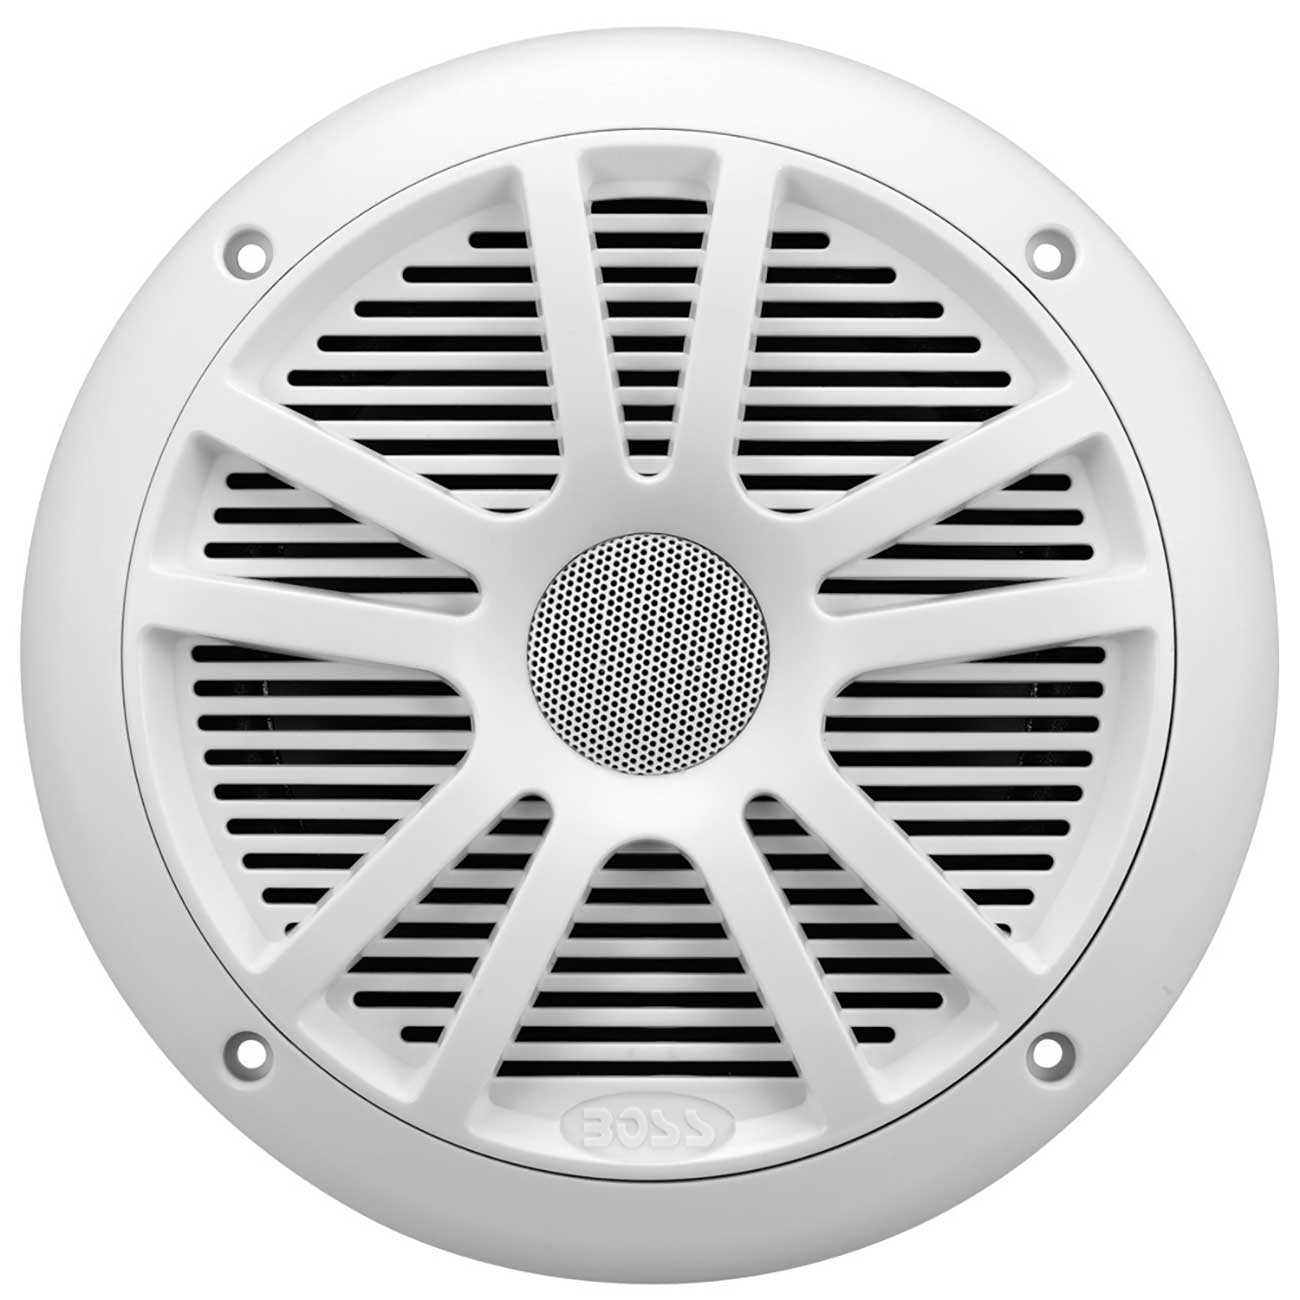 Boss Audio Marine 6.5” Dual Cone Speakers (white)